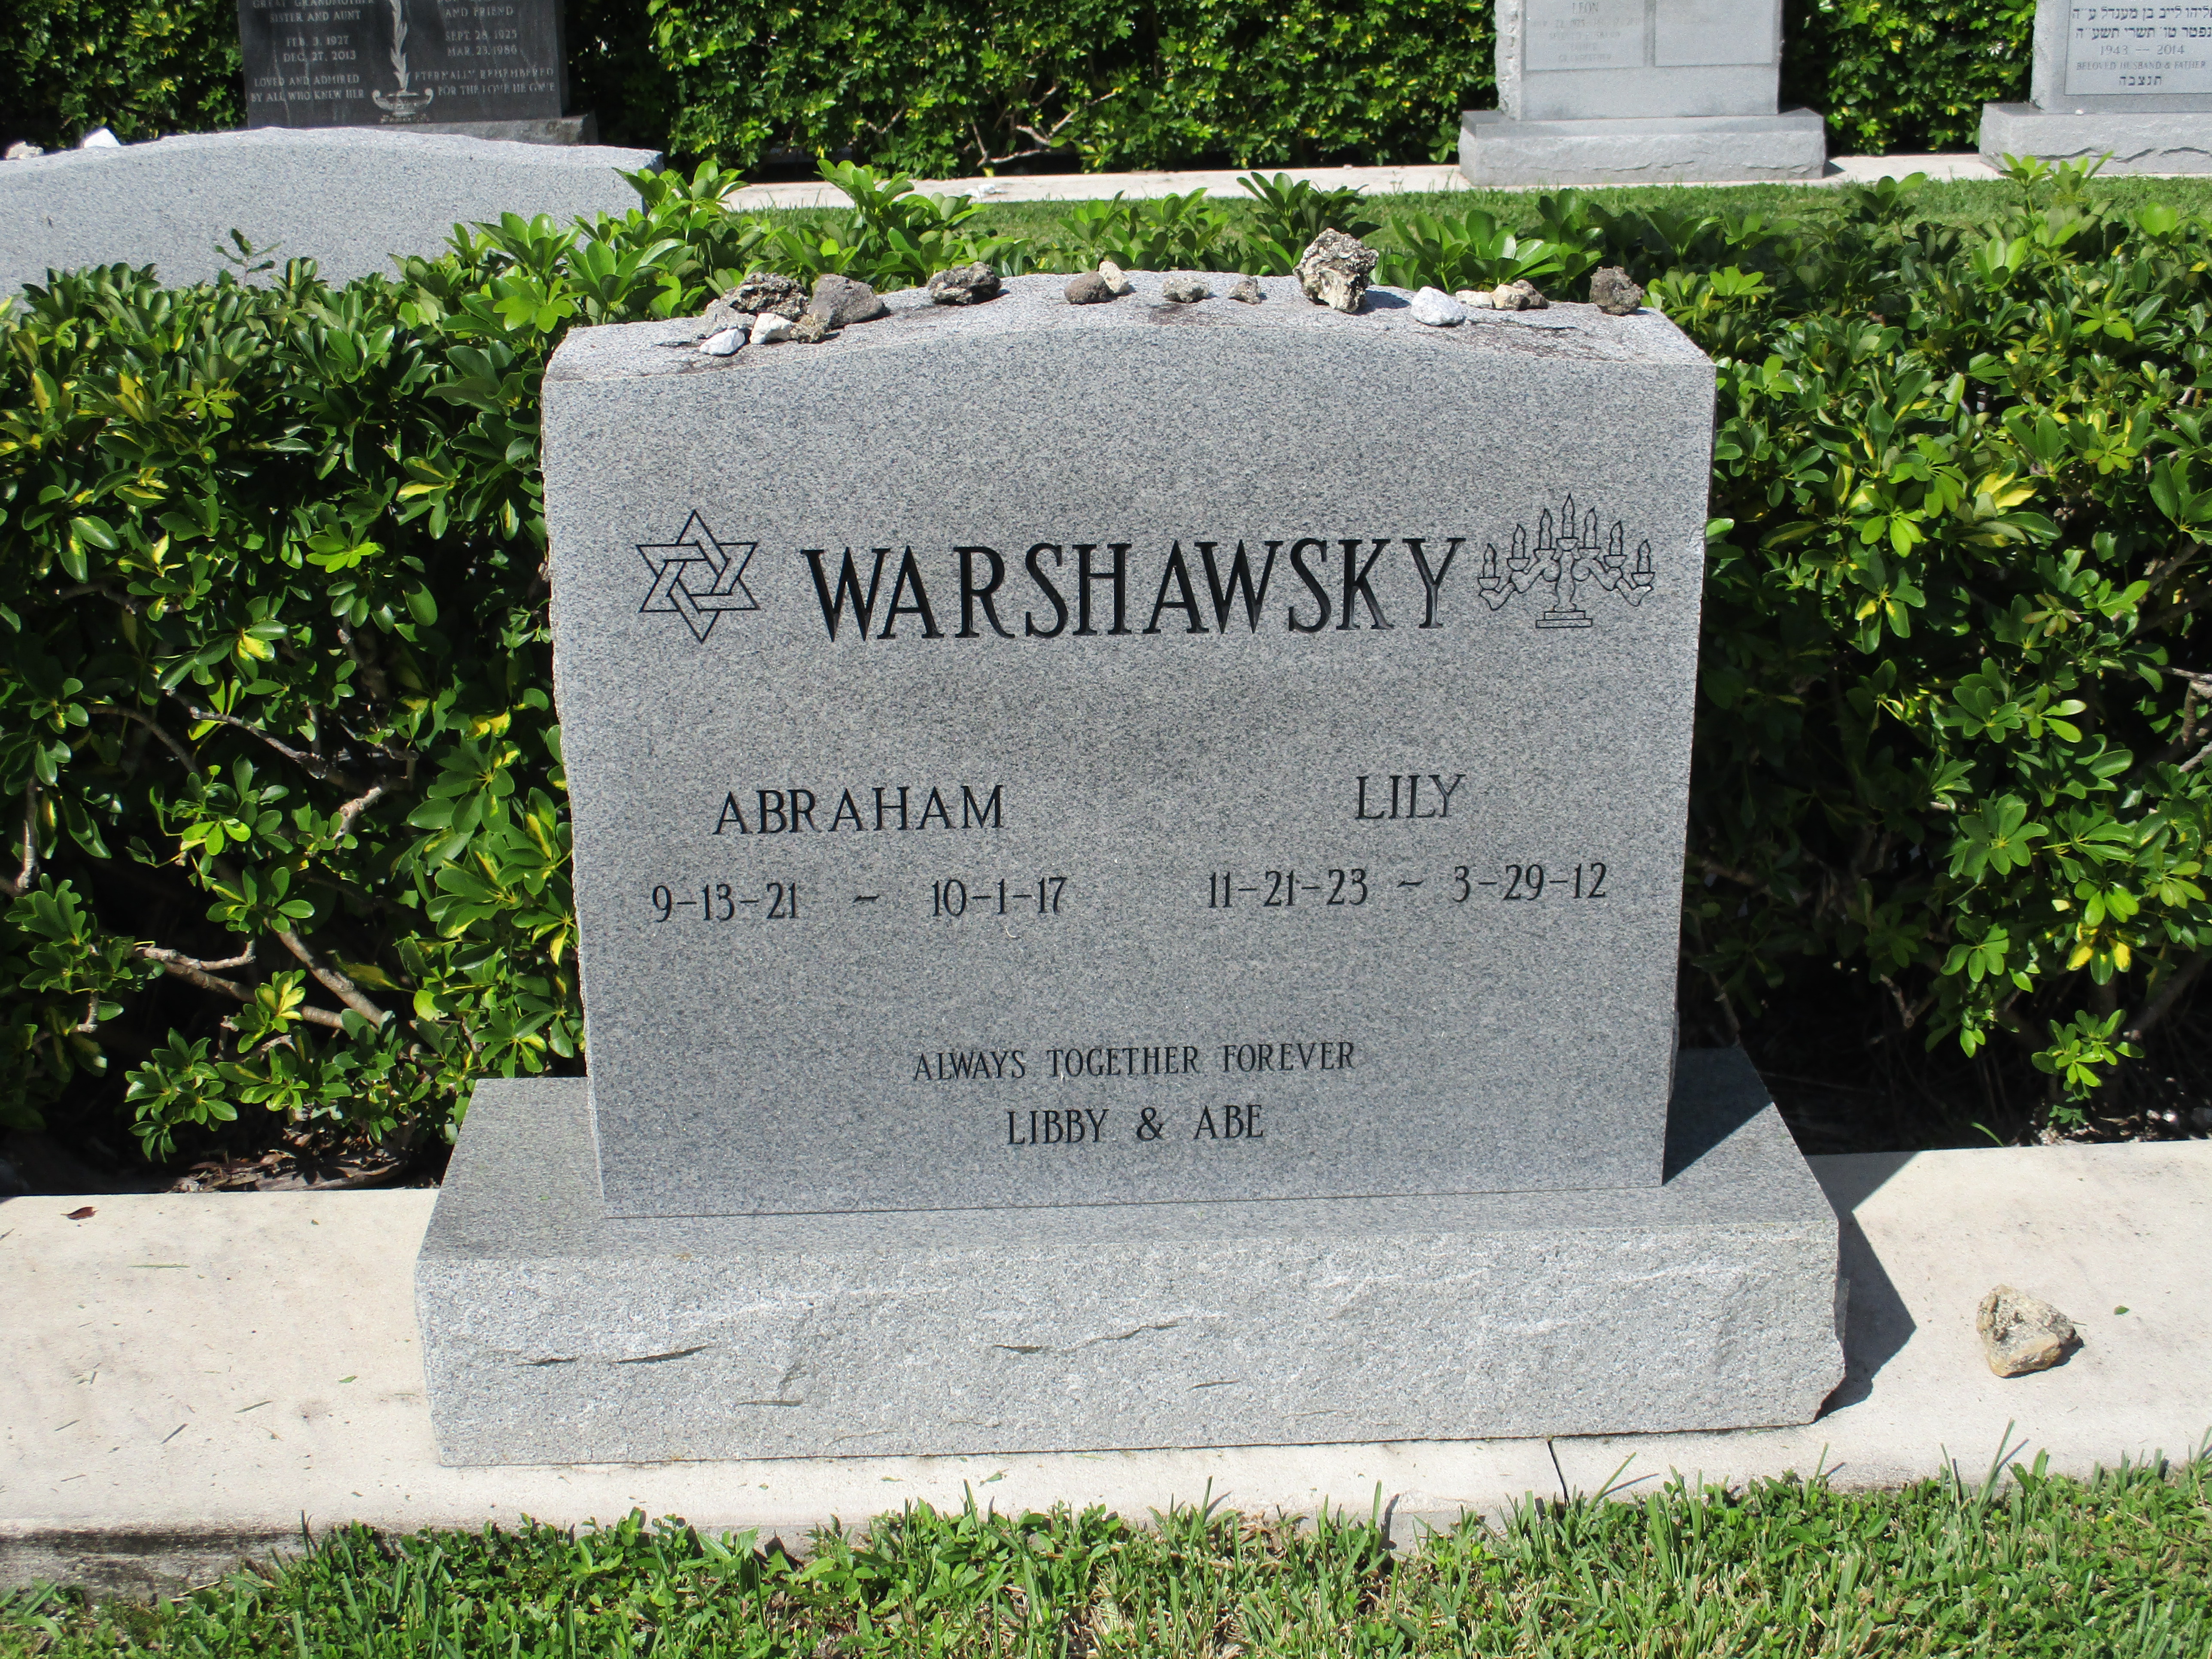 Lily Warshawsky